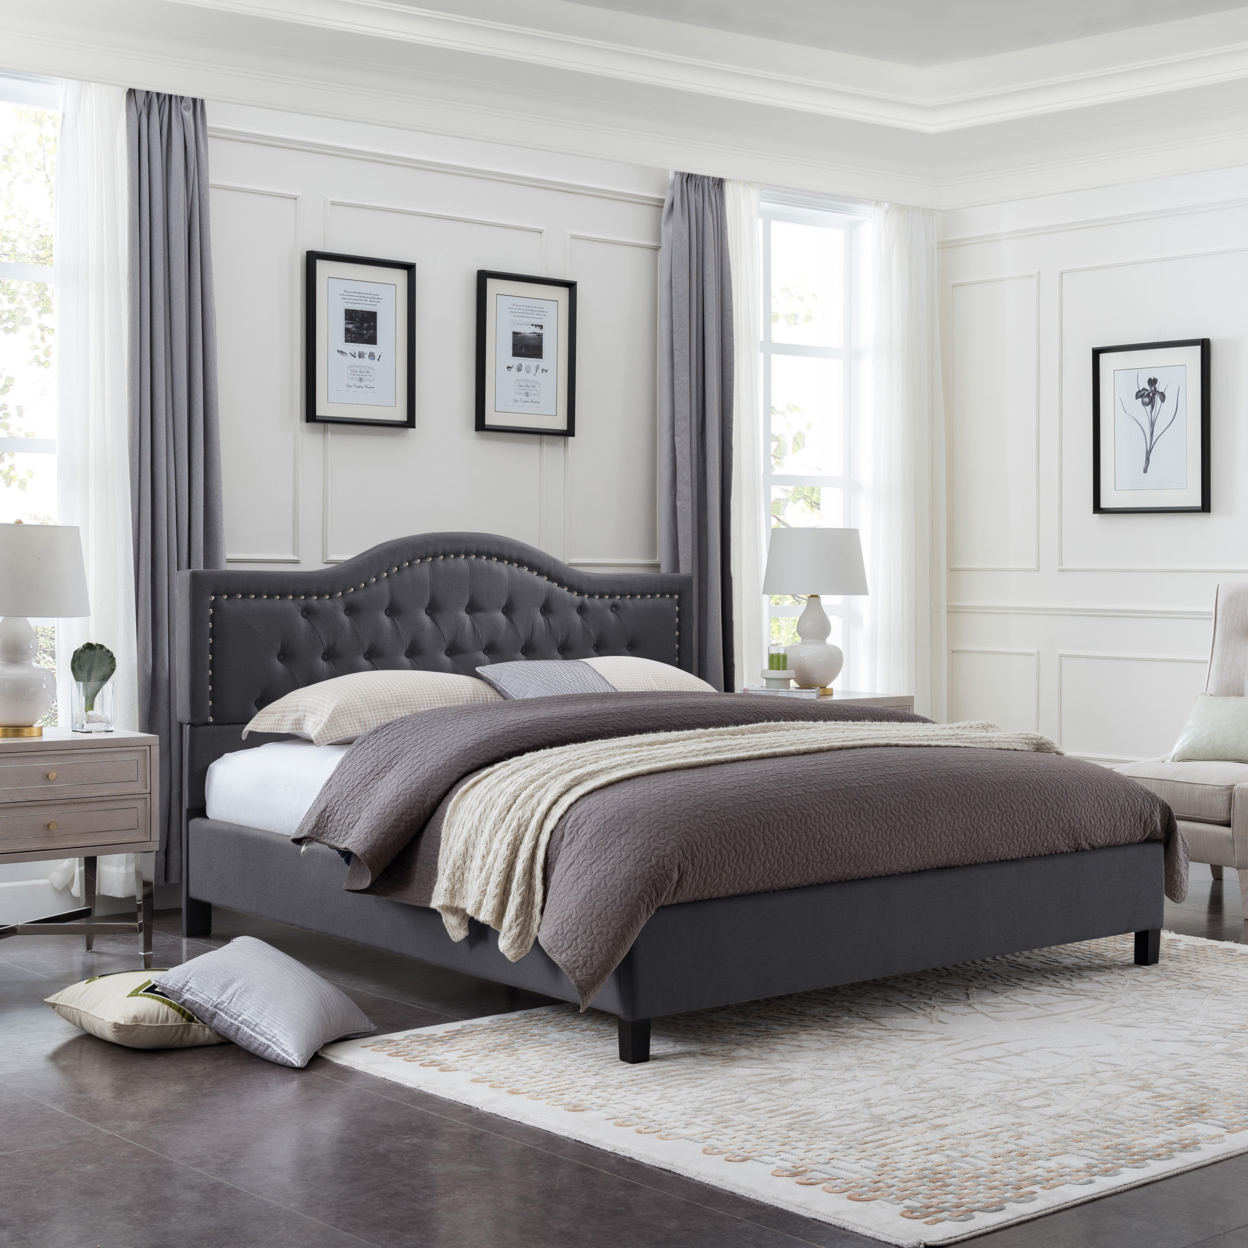 Margaret Fully-Upholstered Traditional King-Sized Bed Frame - Dark Gray + Dark Brown